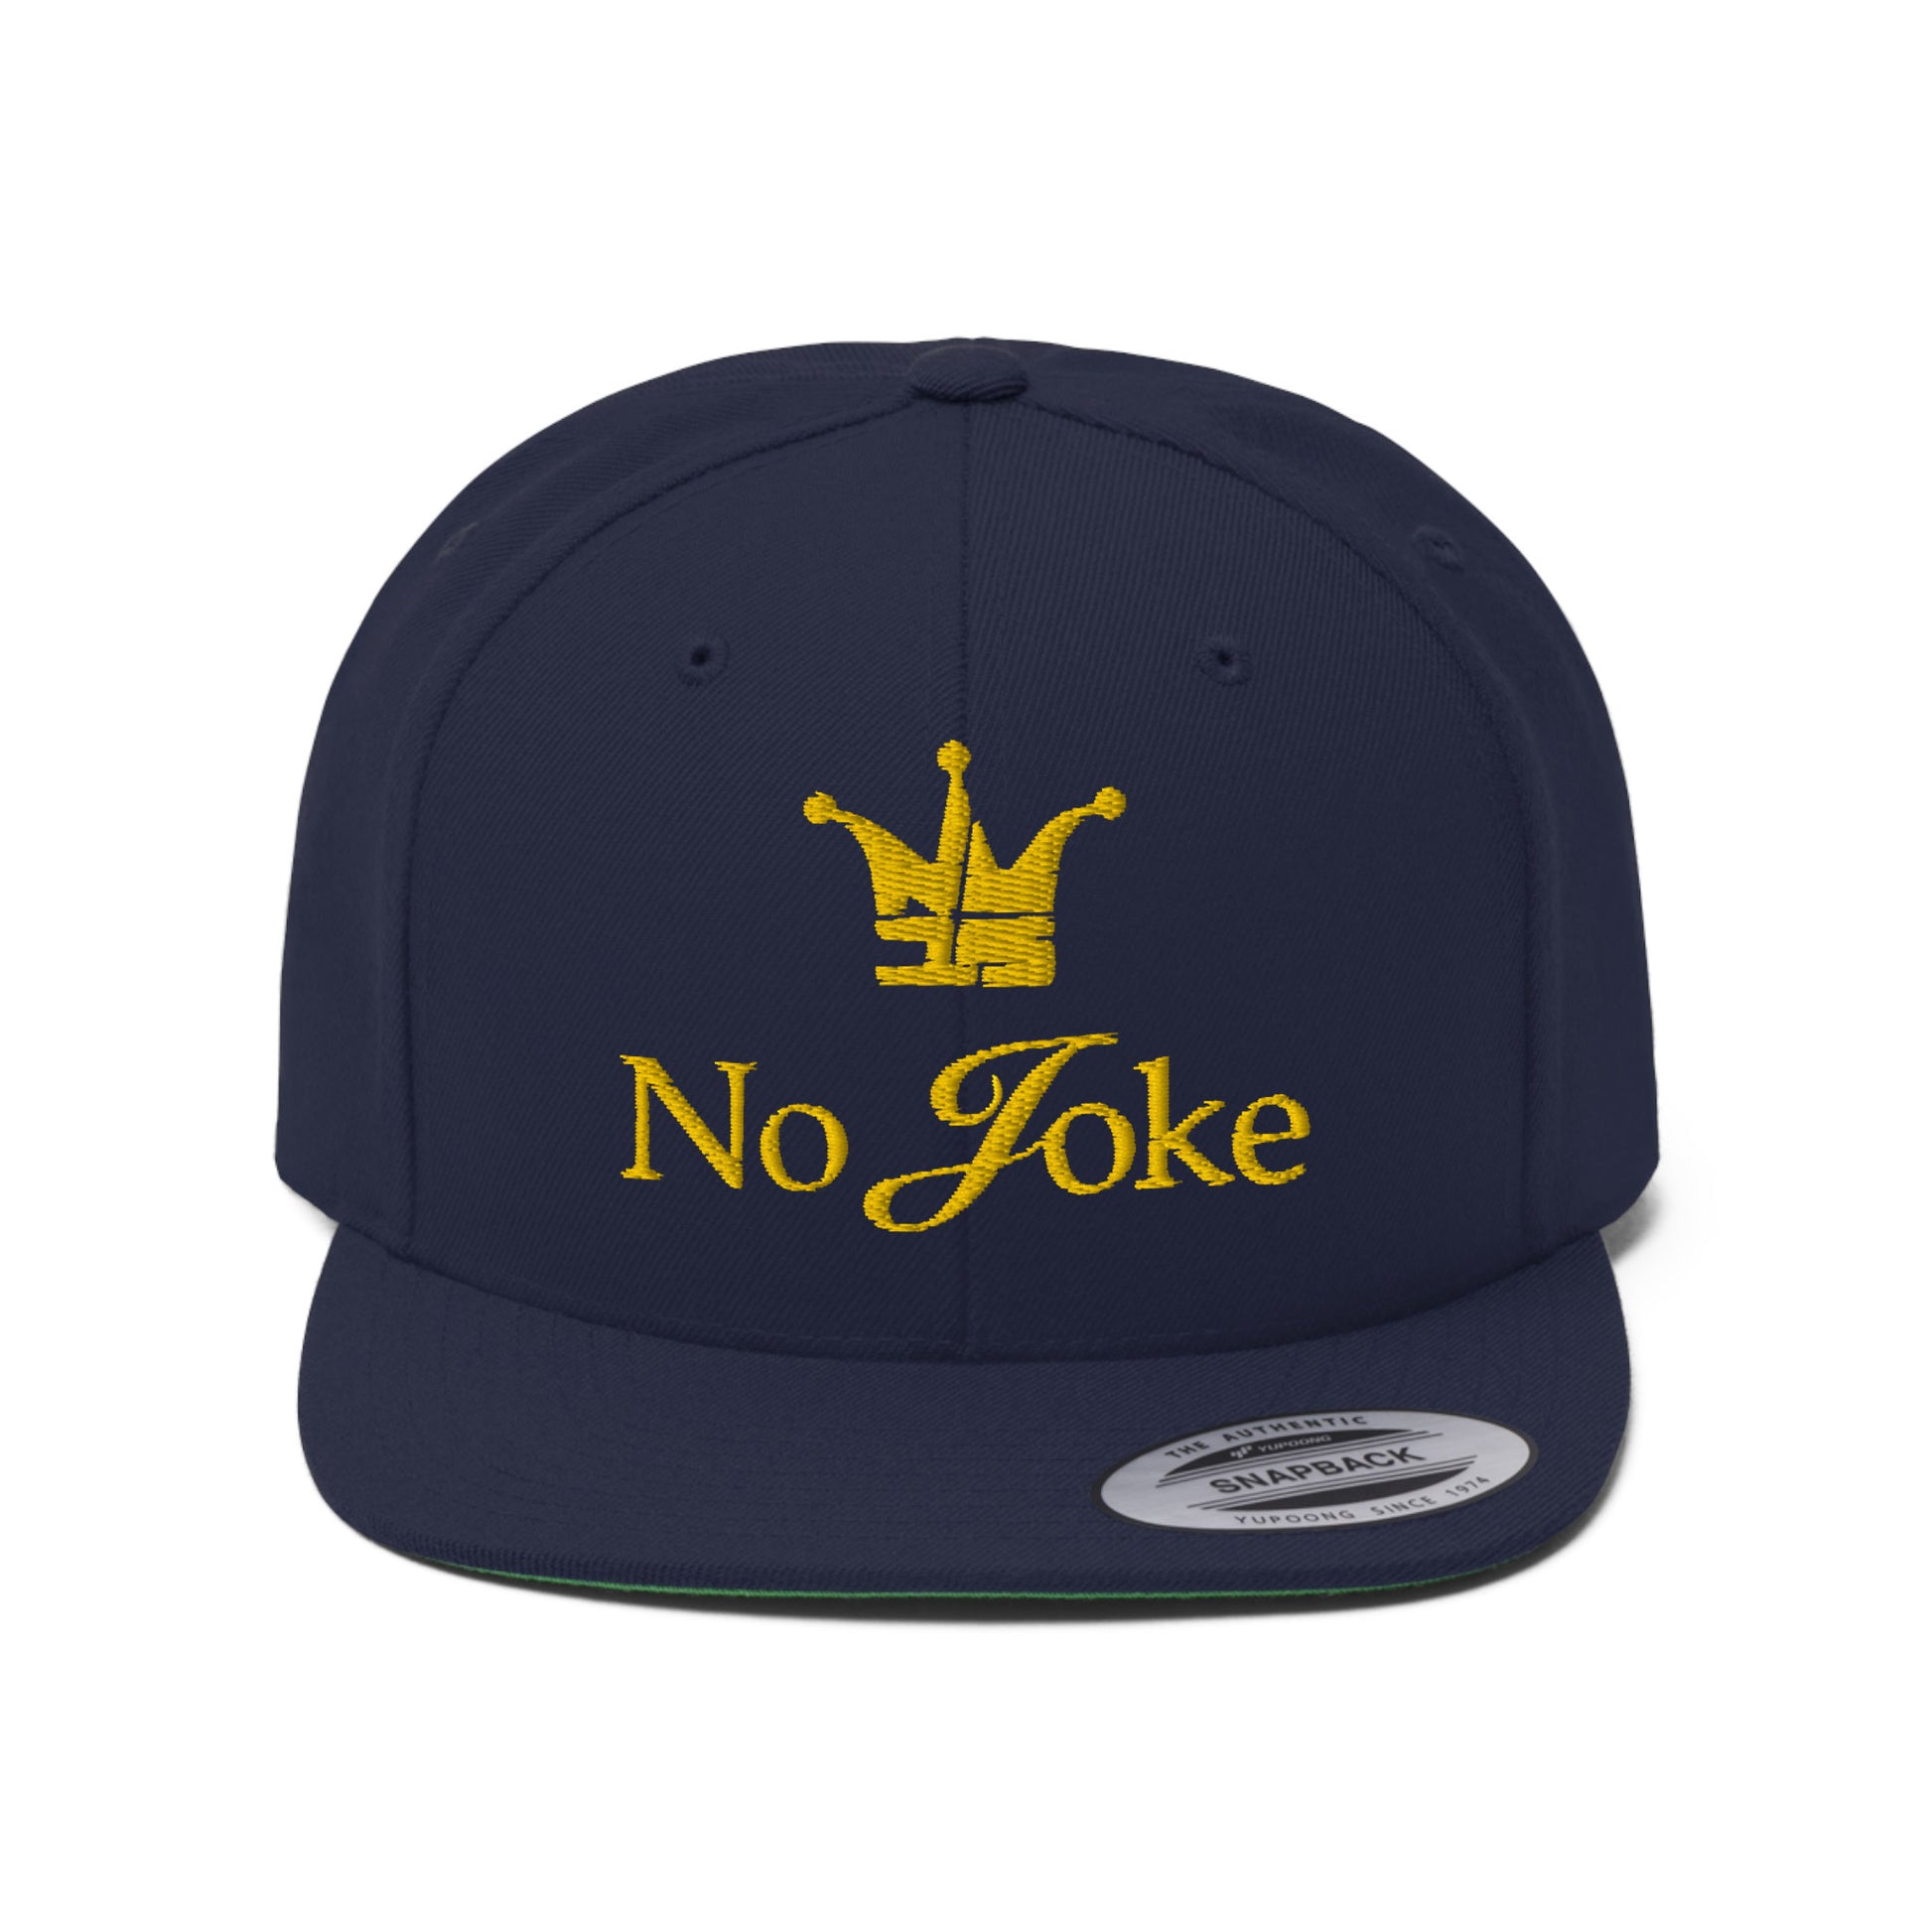 Nikola Jokic Joke No Hat